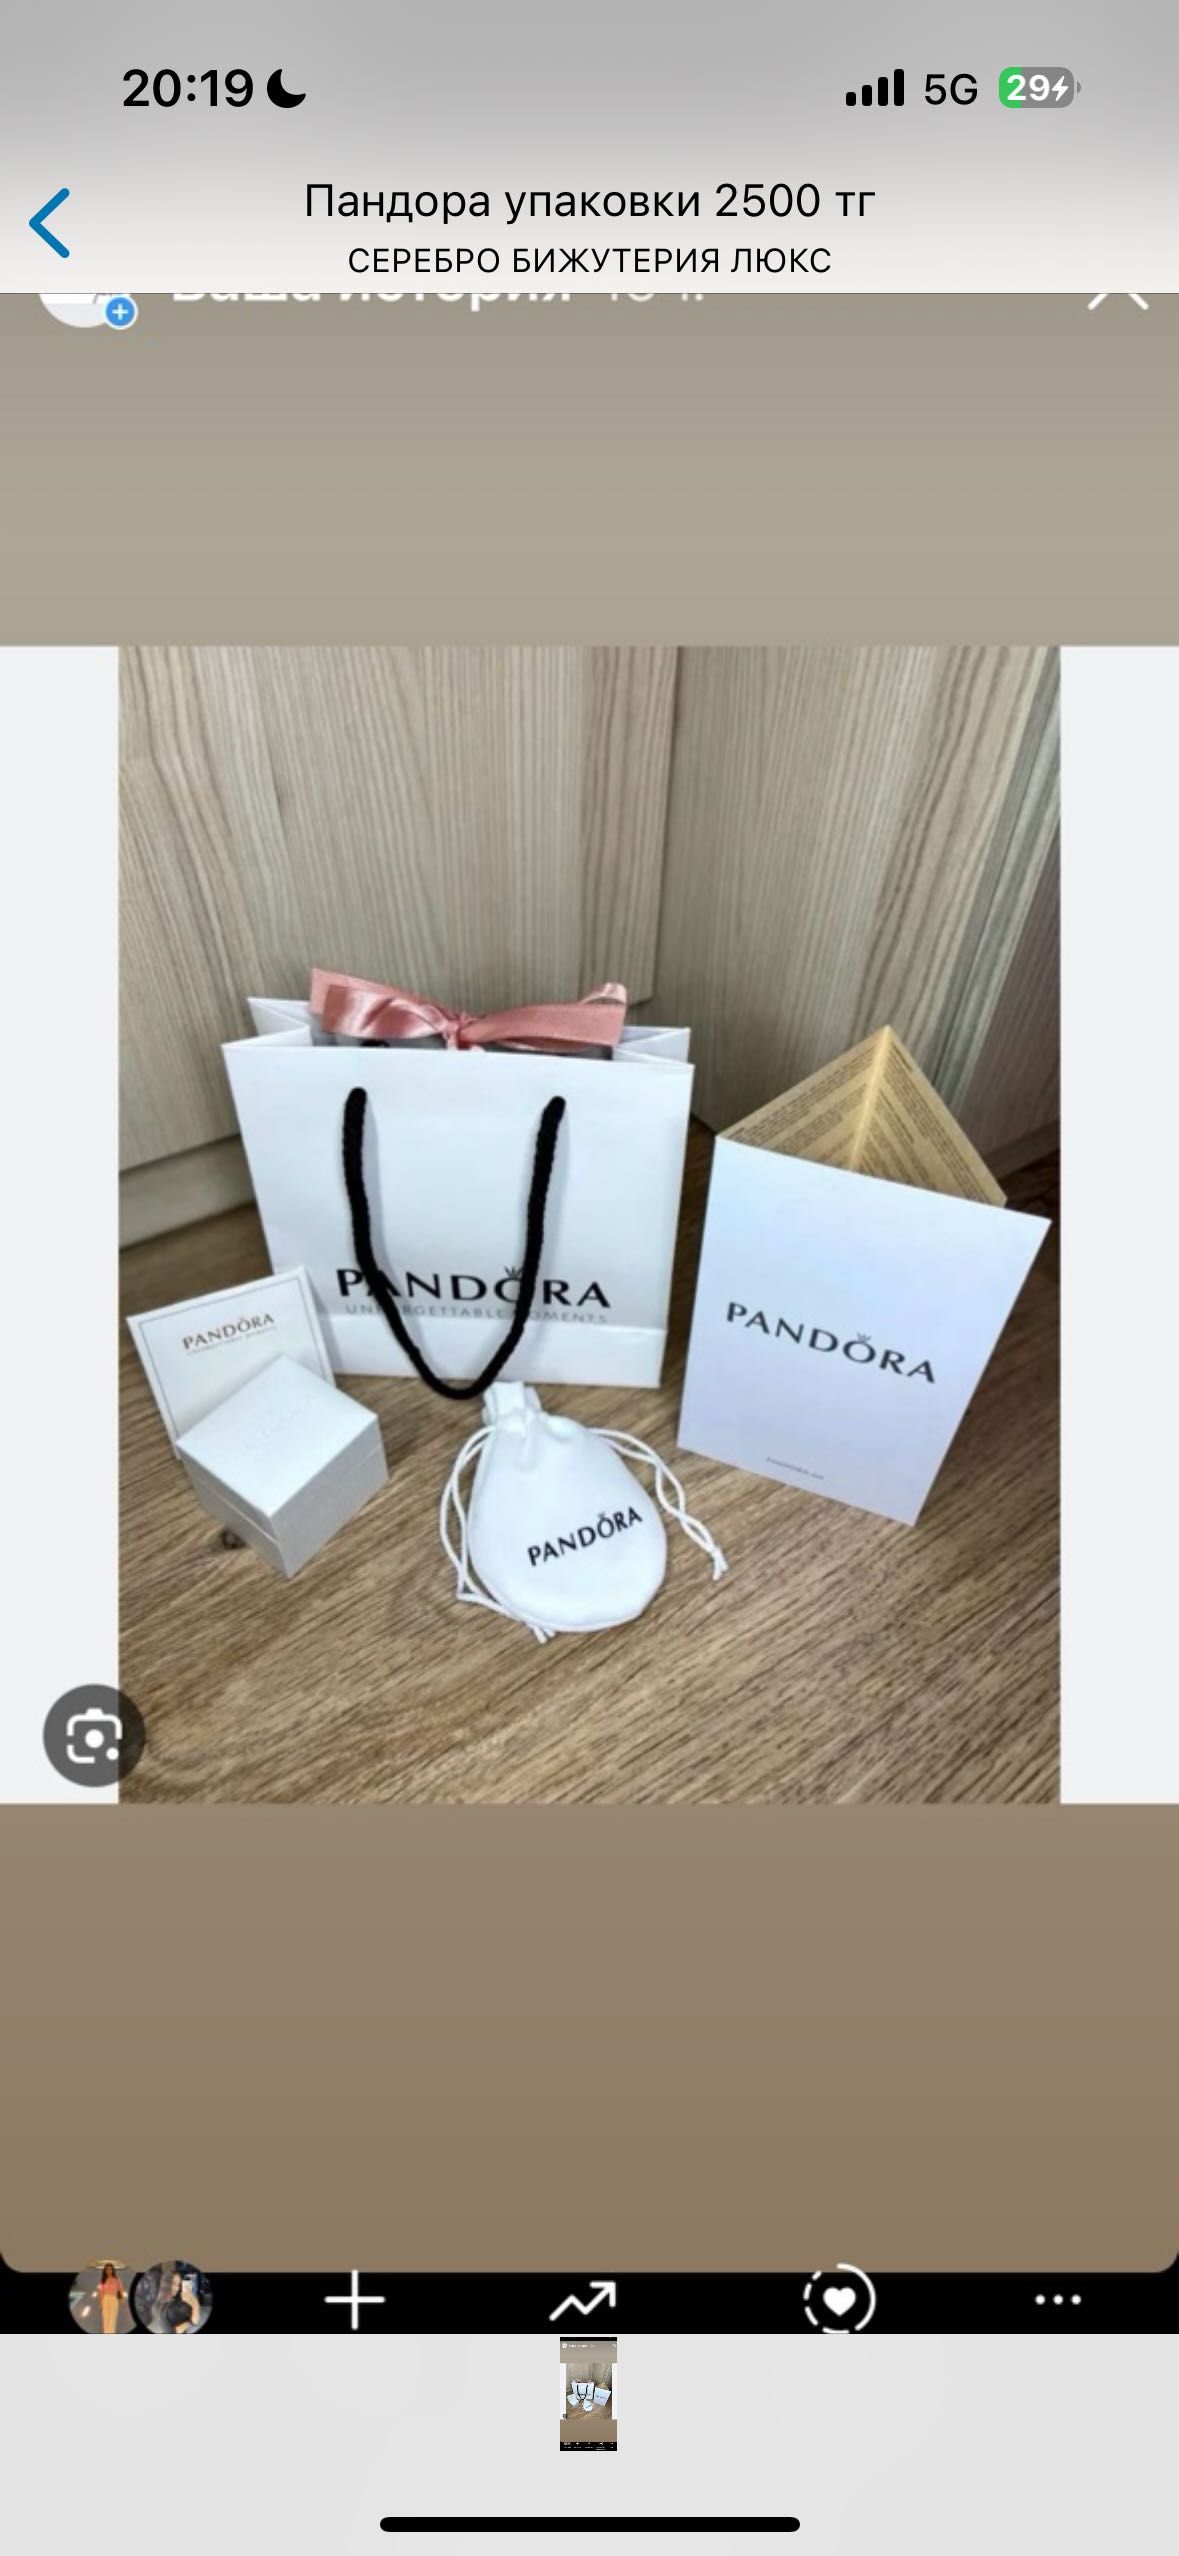 Пандора, Pandora  упаковка, пакеты